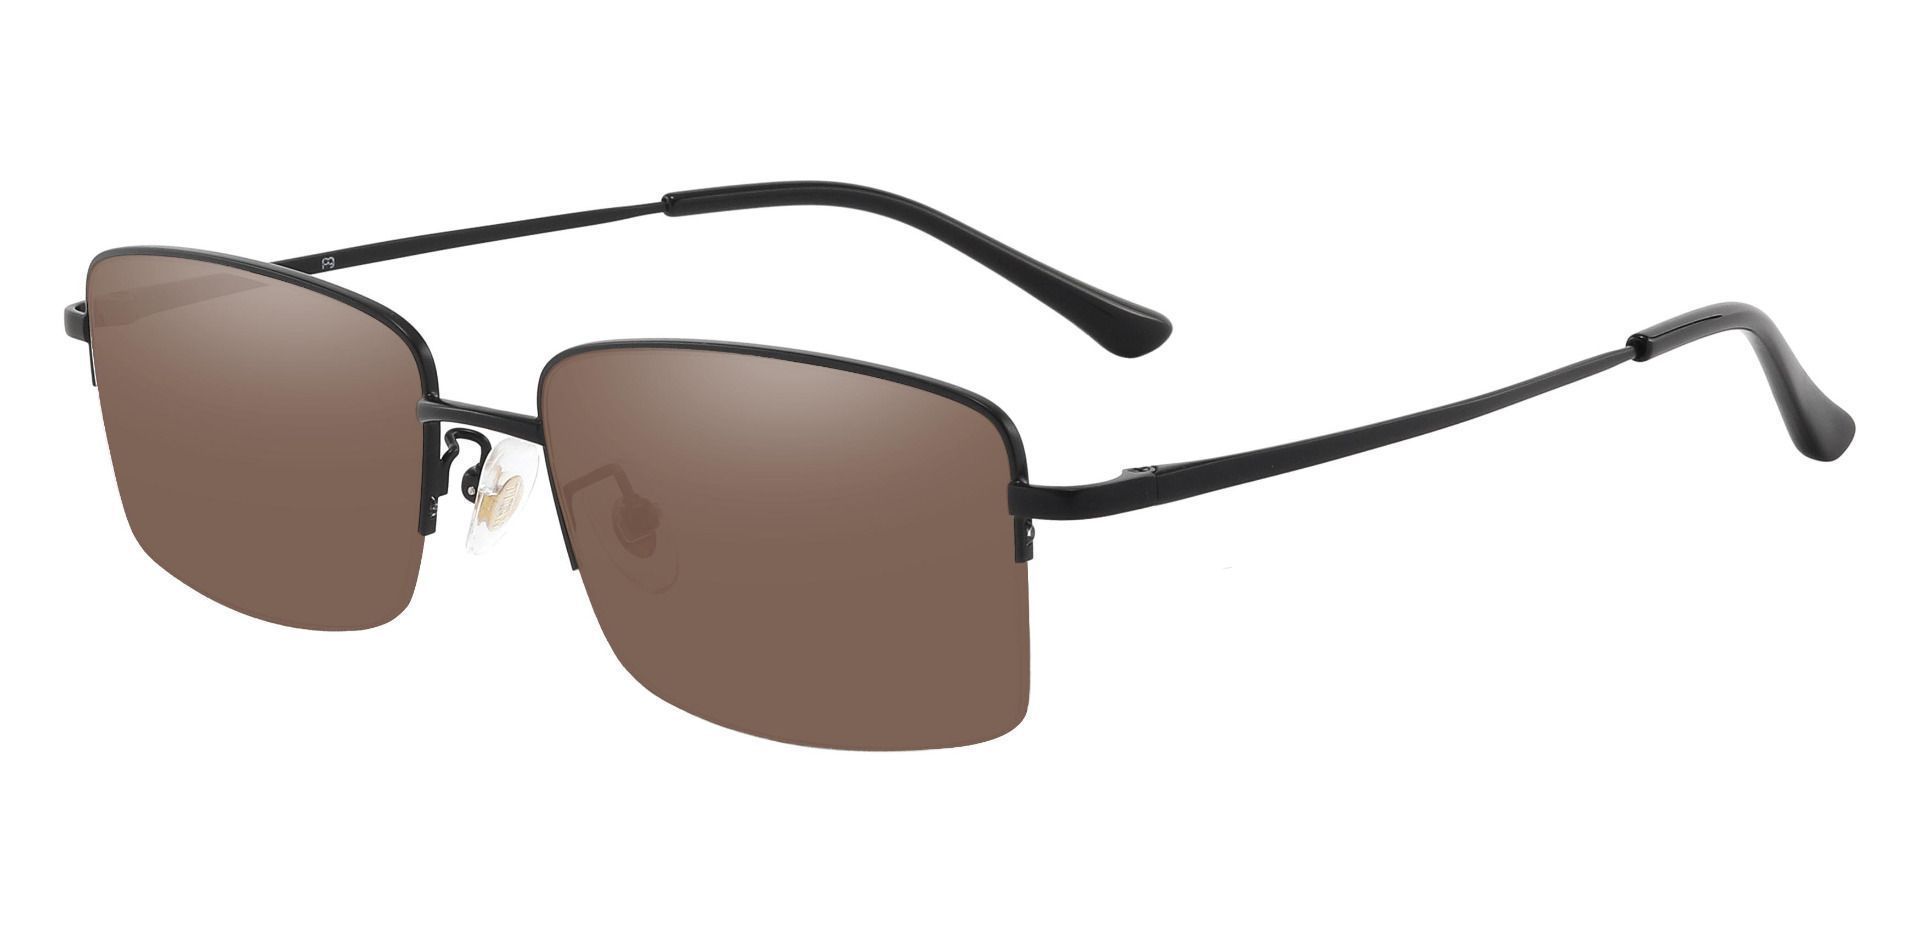 Bellmont Rectangle Progressive Sunglasses - Black Frame With Brown Lenses